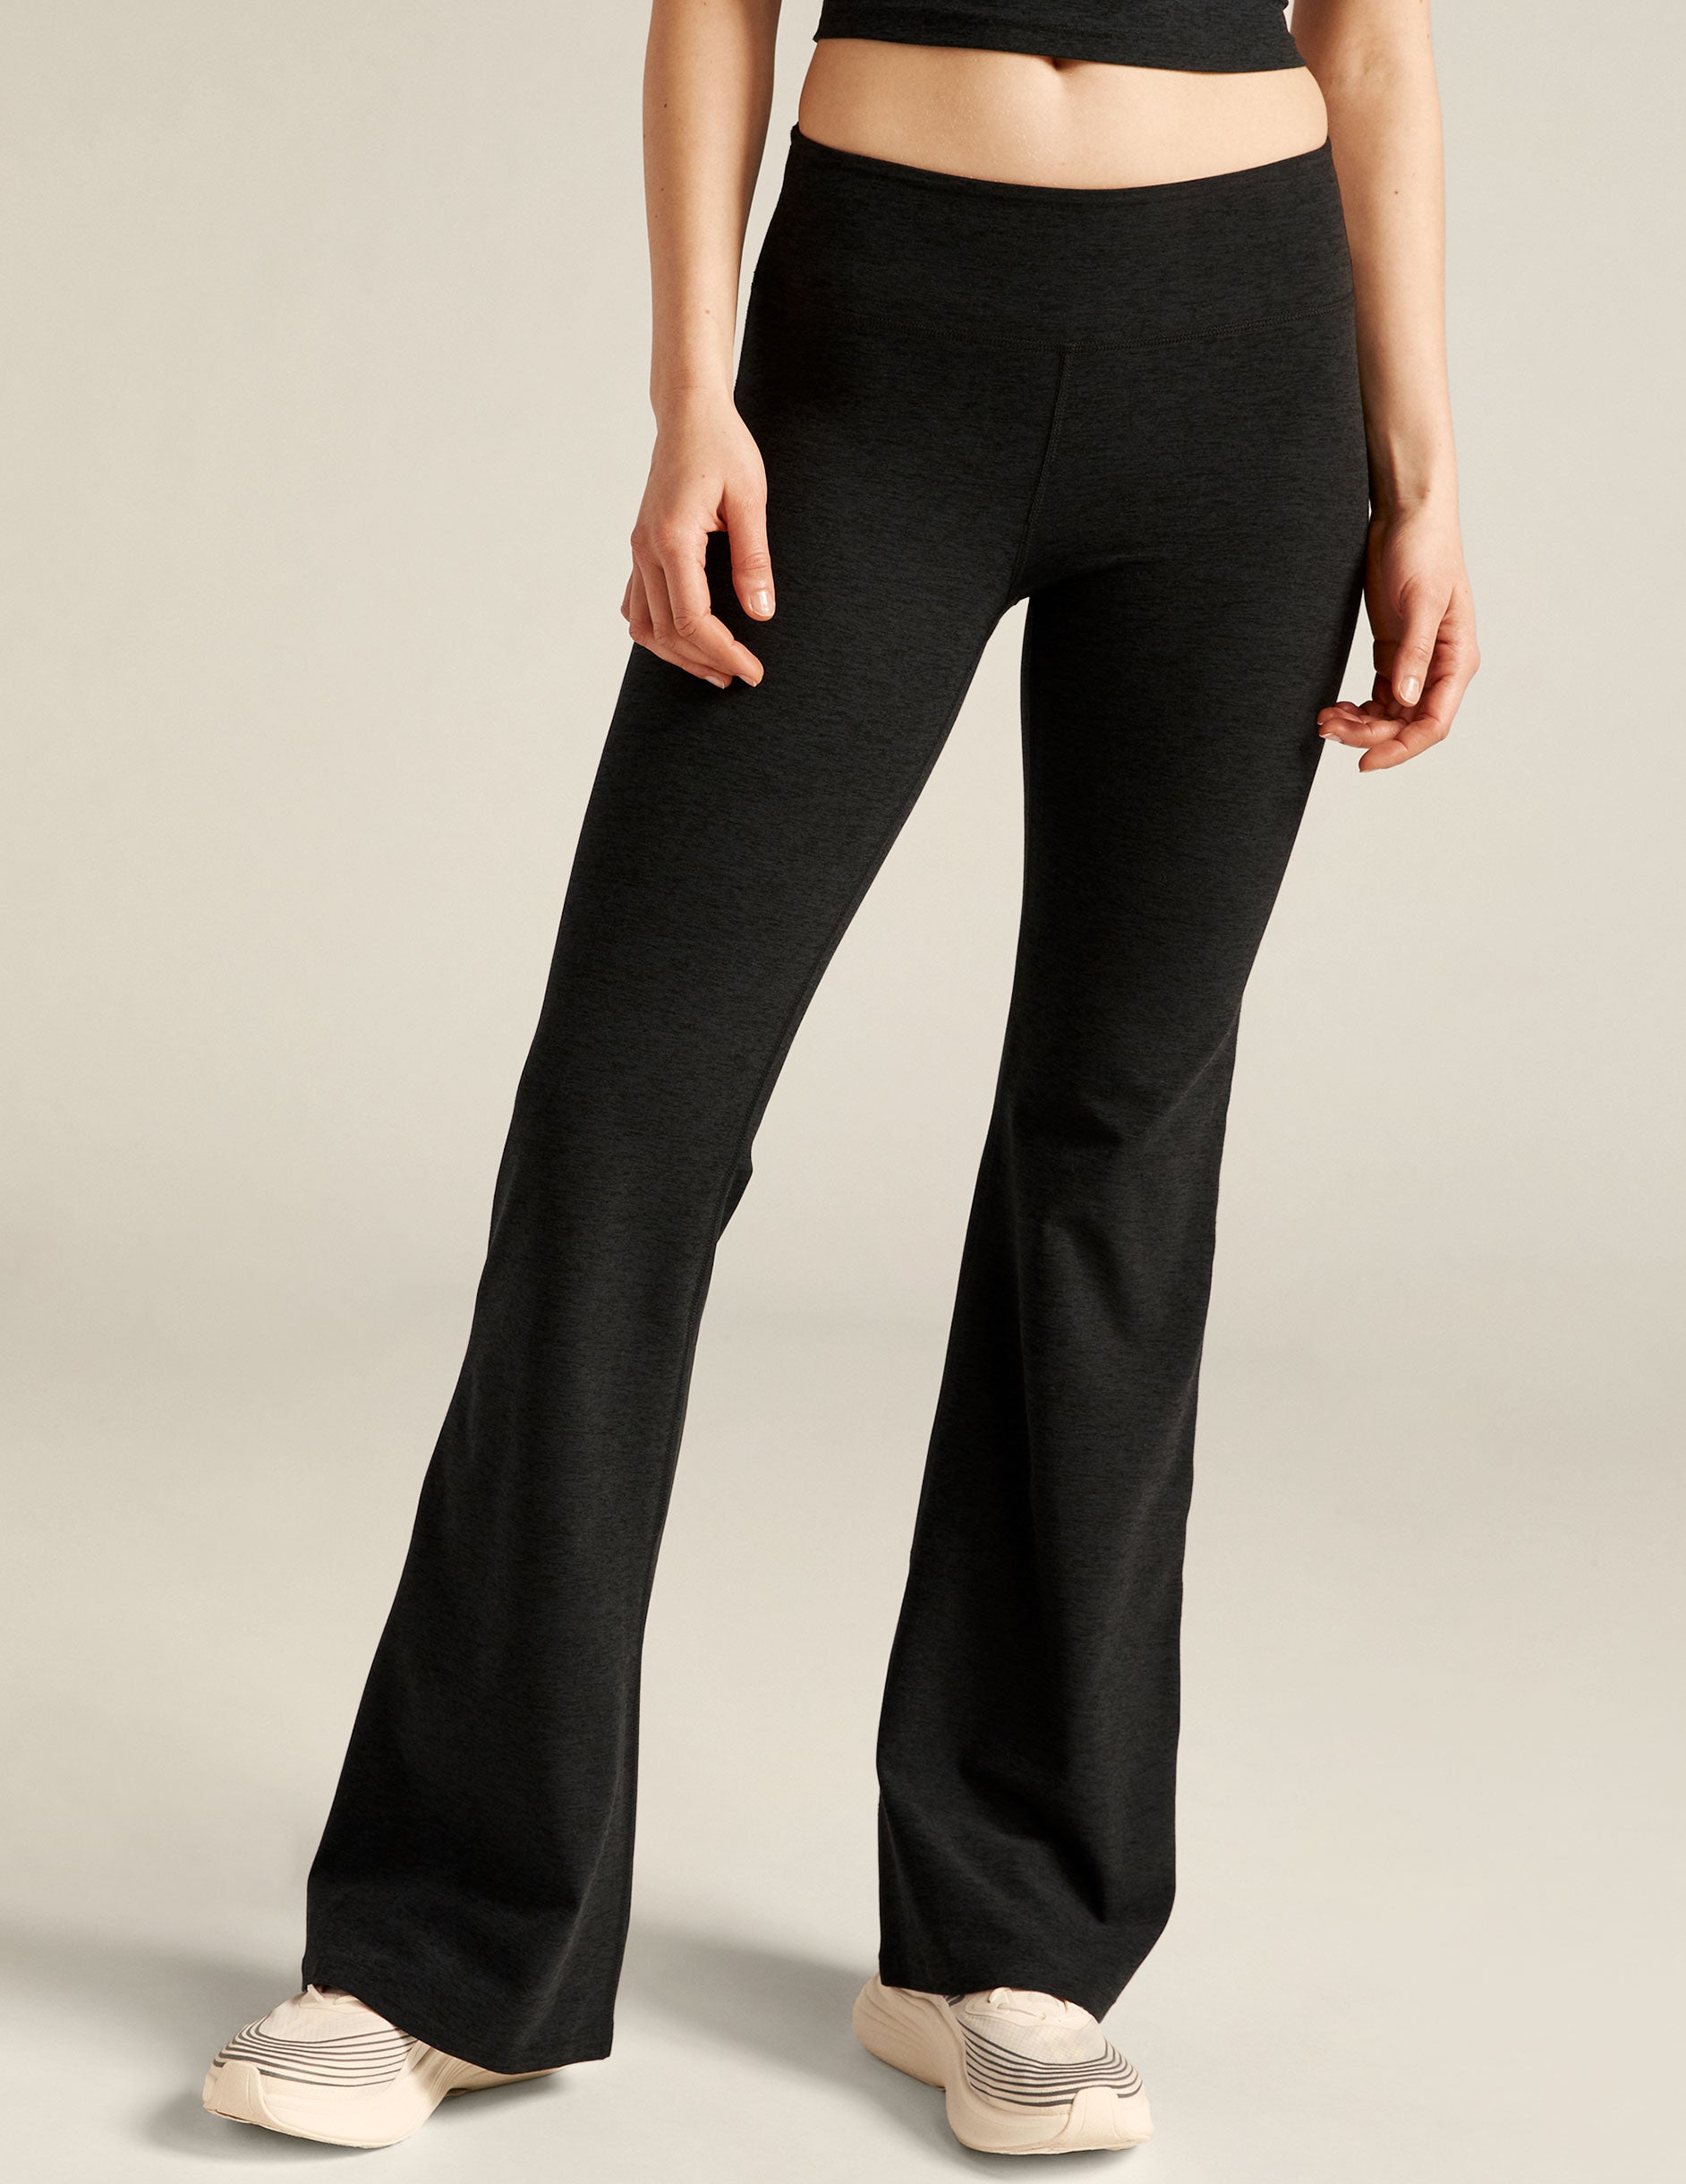 black low-waisted flare leggings.